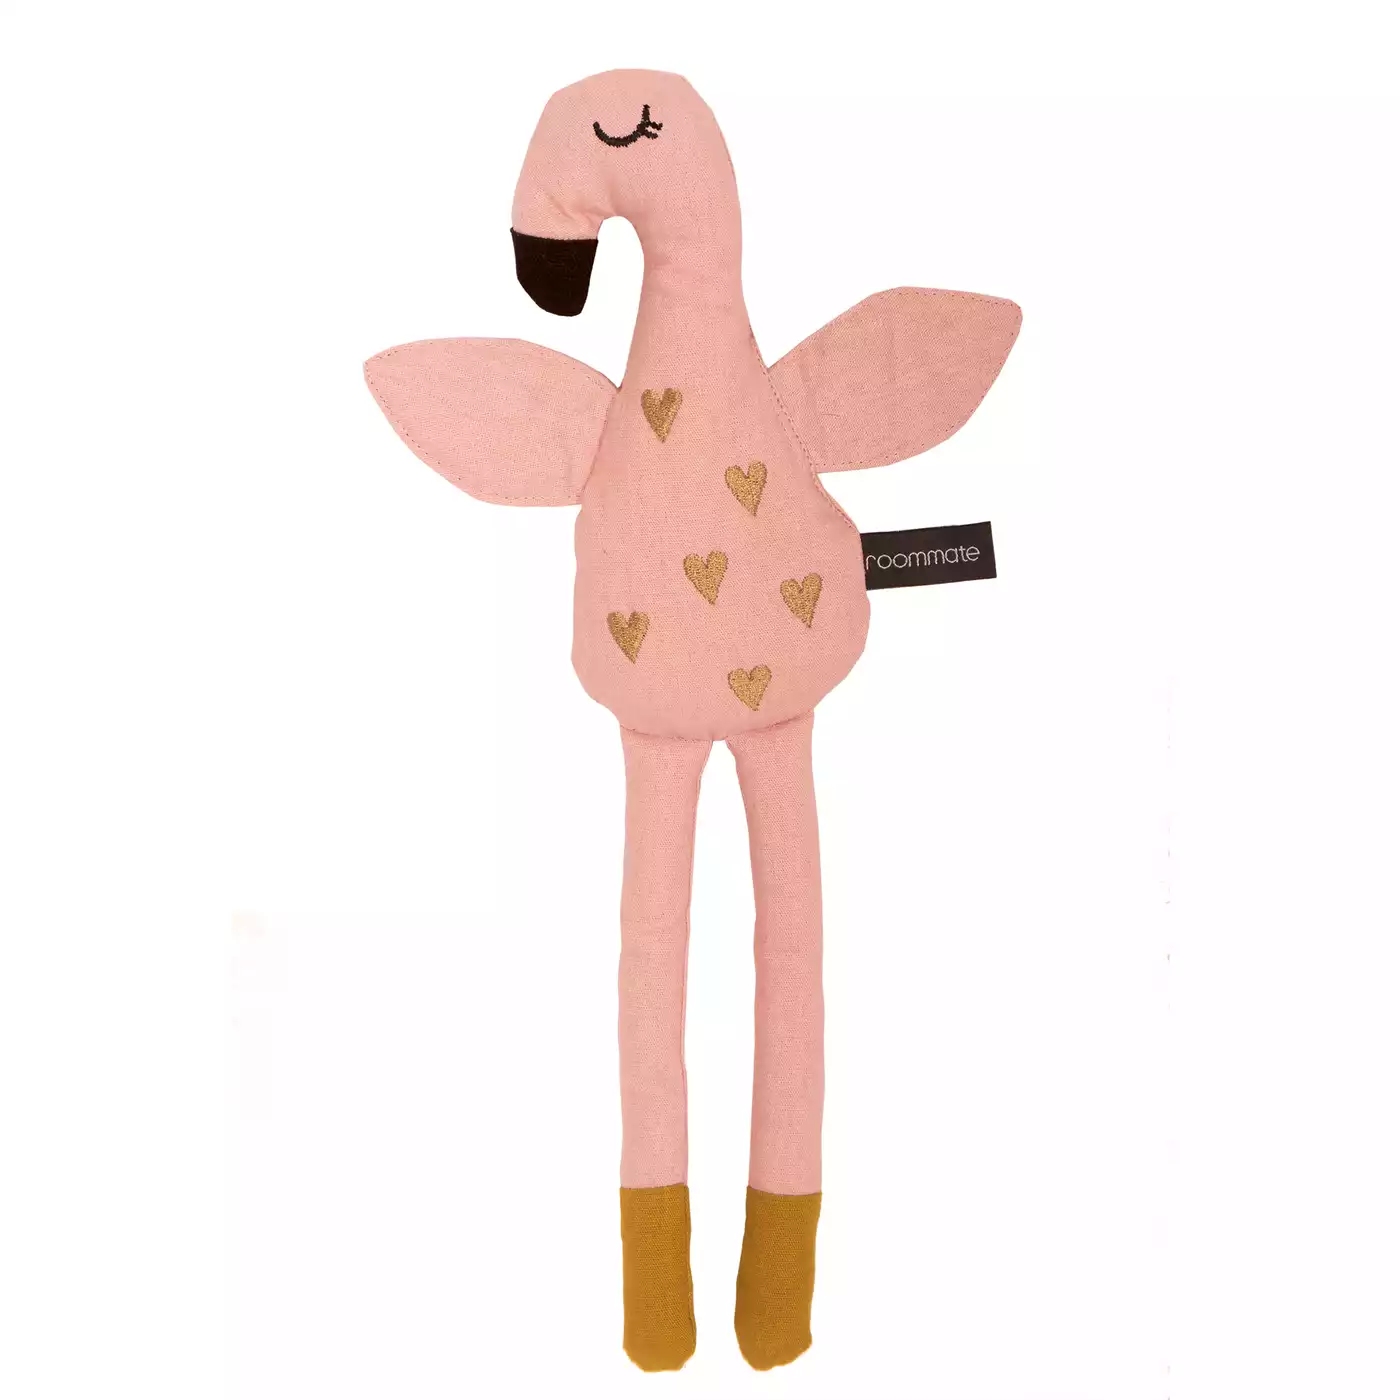 Stofftier Flamingo Roommate Pink 2000578813239 1